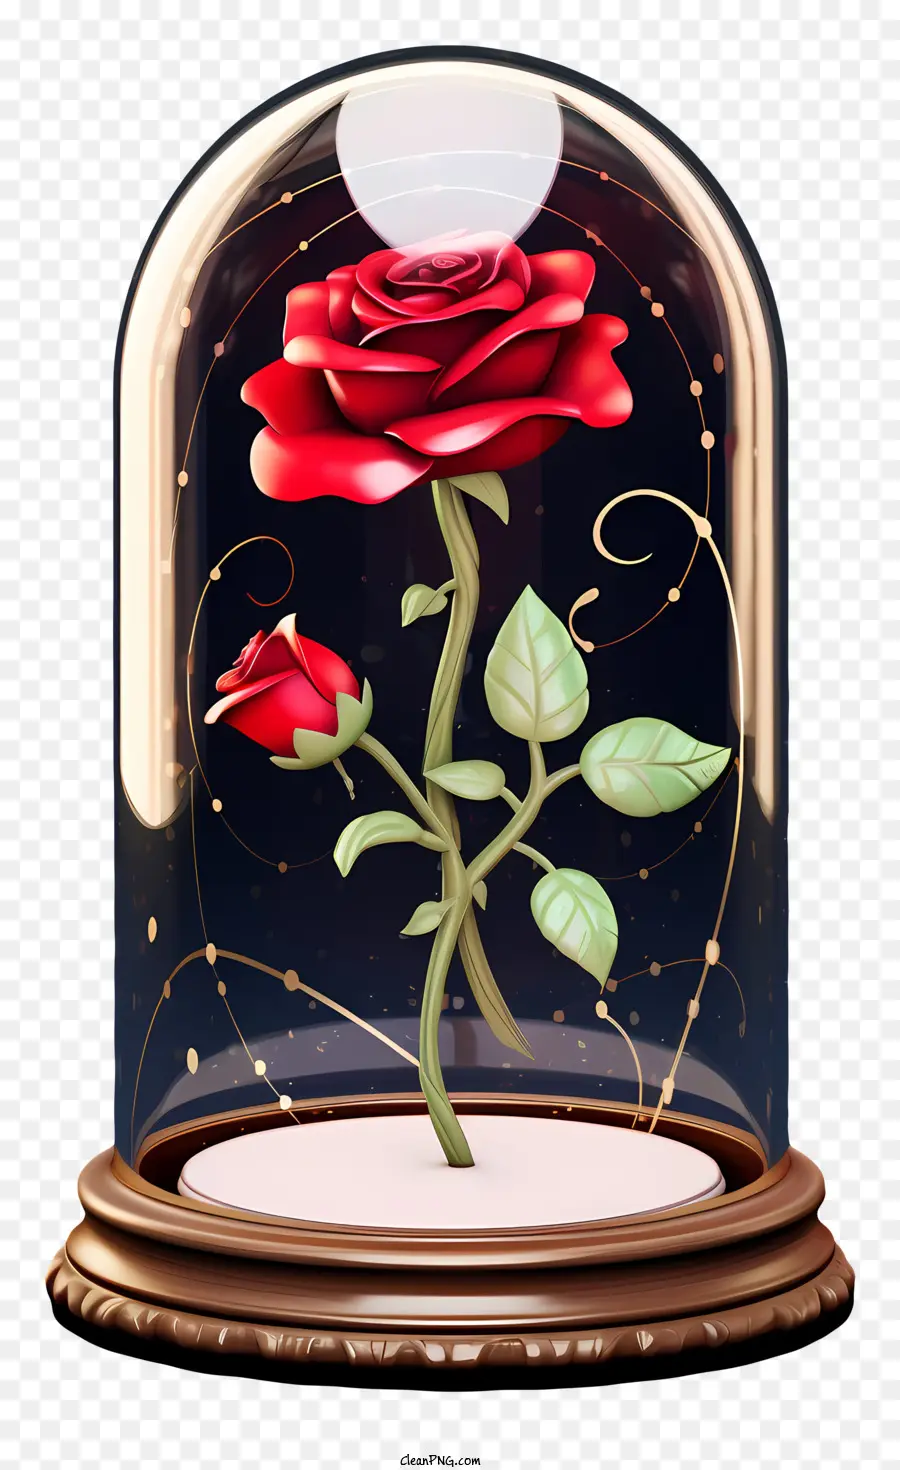 rote rose - Rote Rose in Glaskuppel mit goldenen Sternen